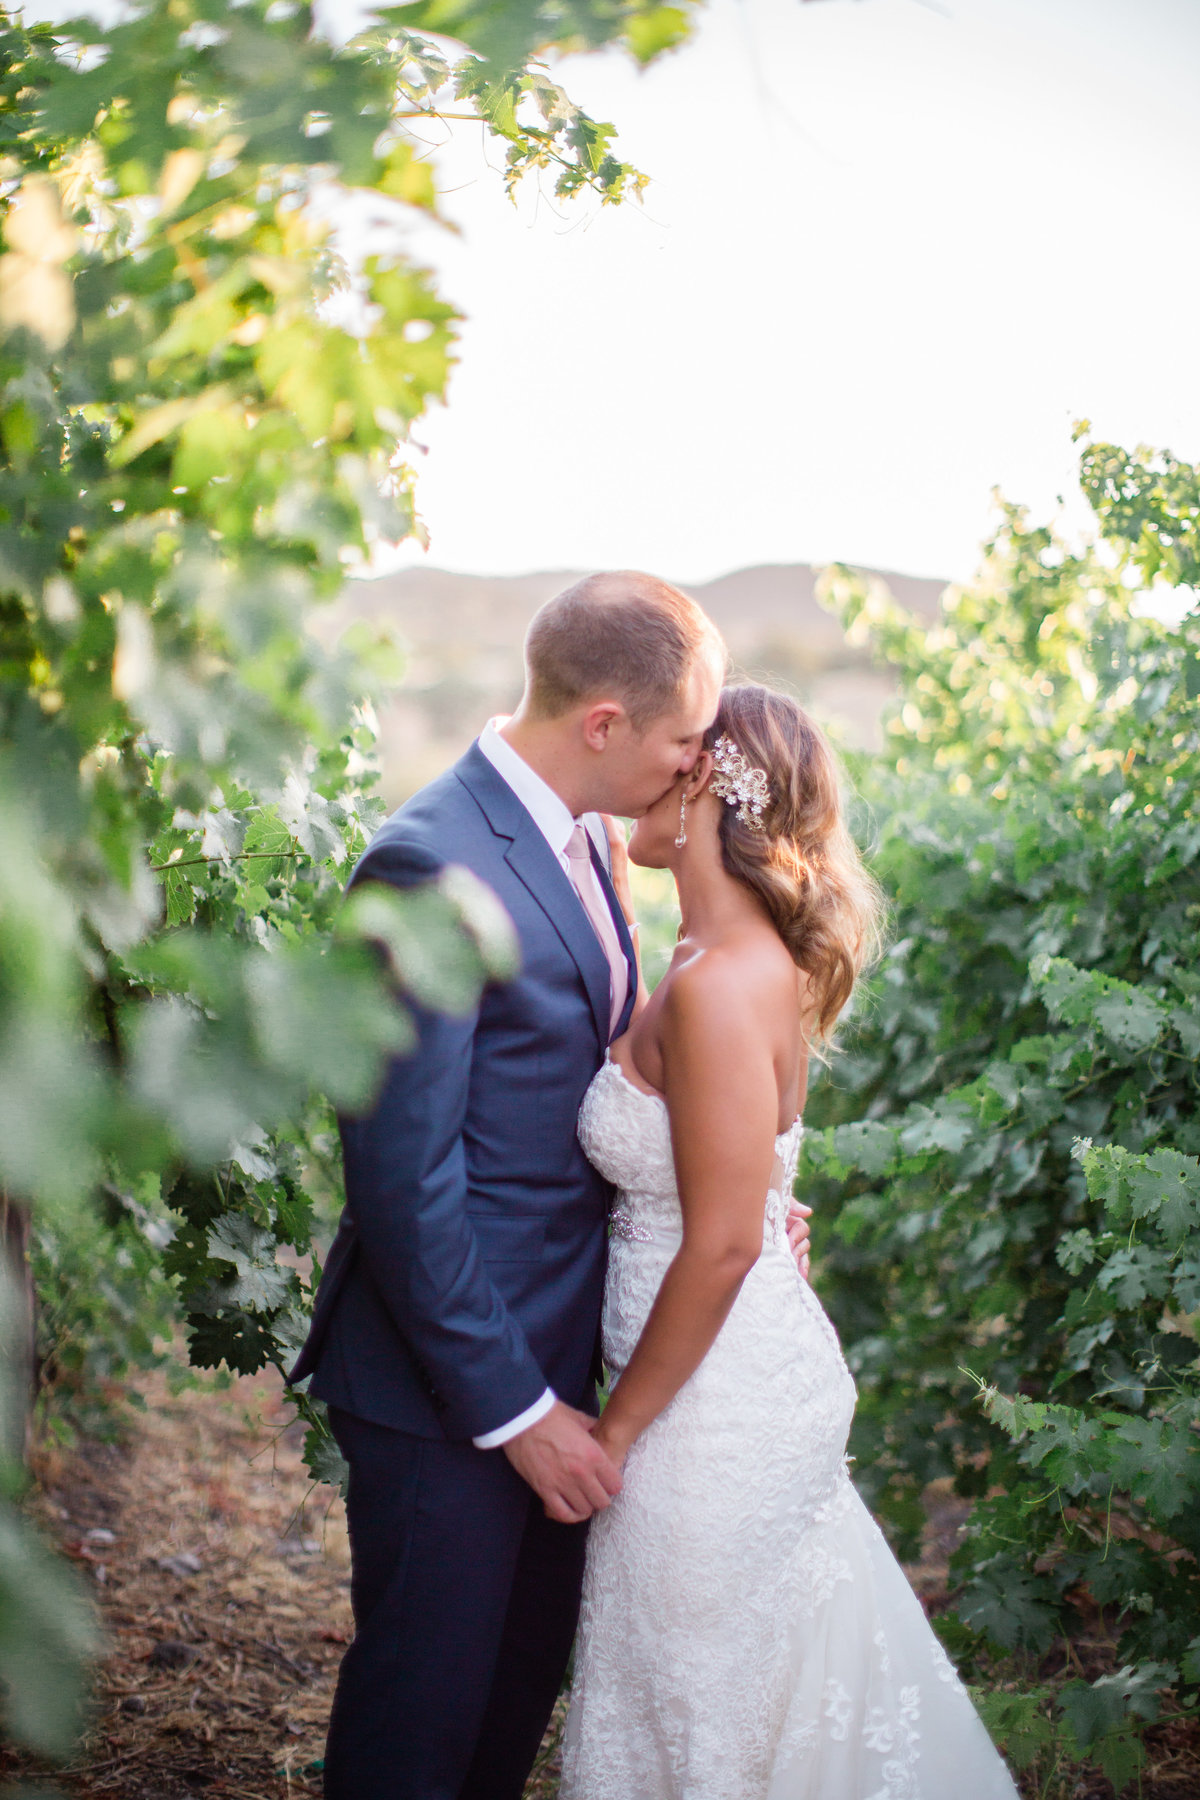 Jenna & Andrew's Oyster Ridge Wedding | Paso Robles Wedding Photographer | Katie Schoepflin Photography534